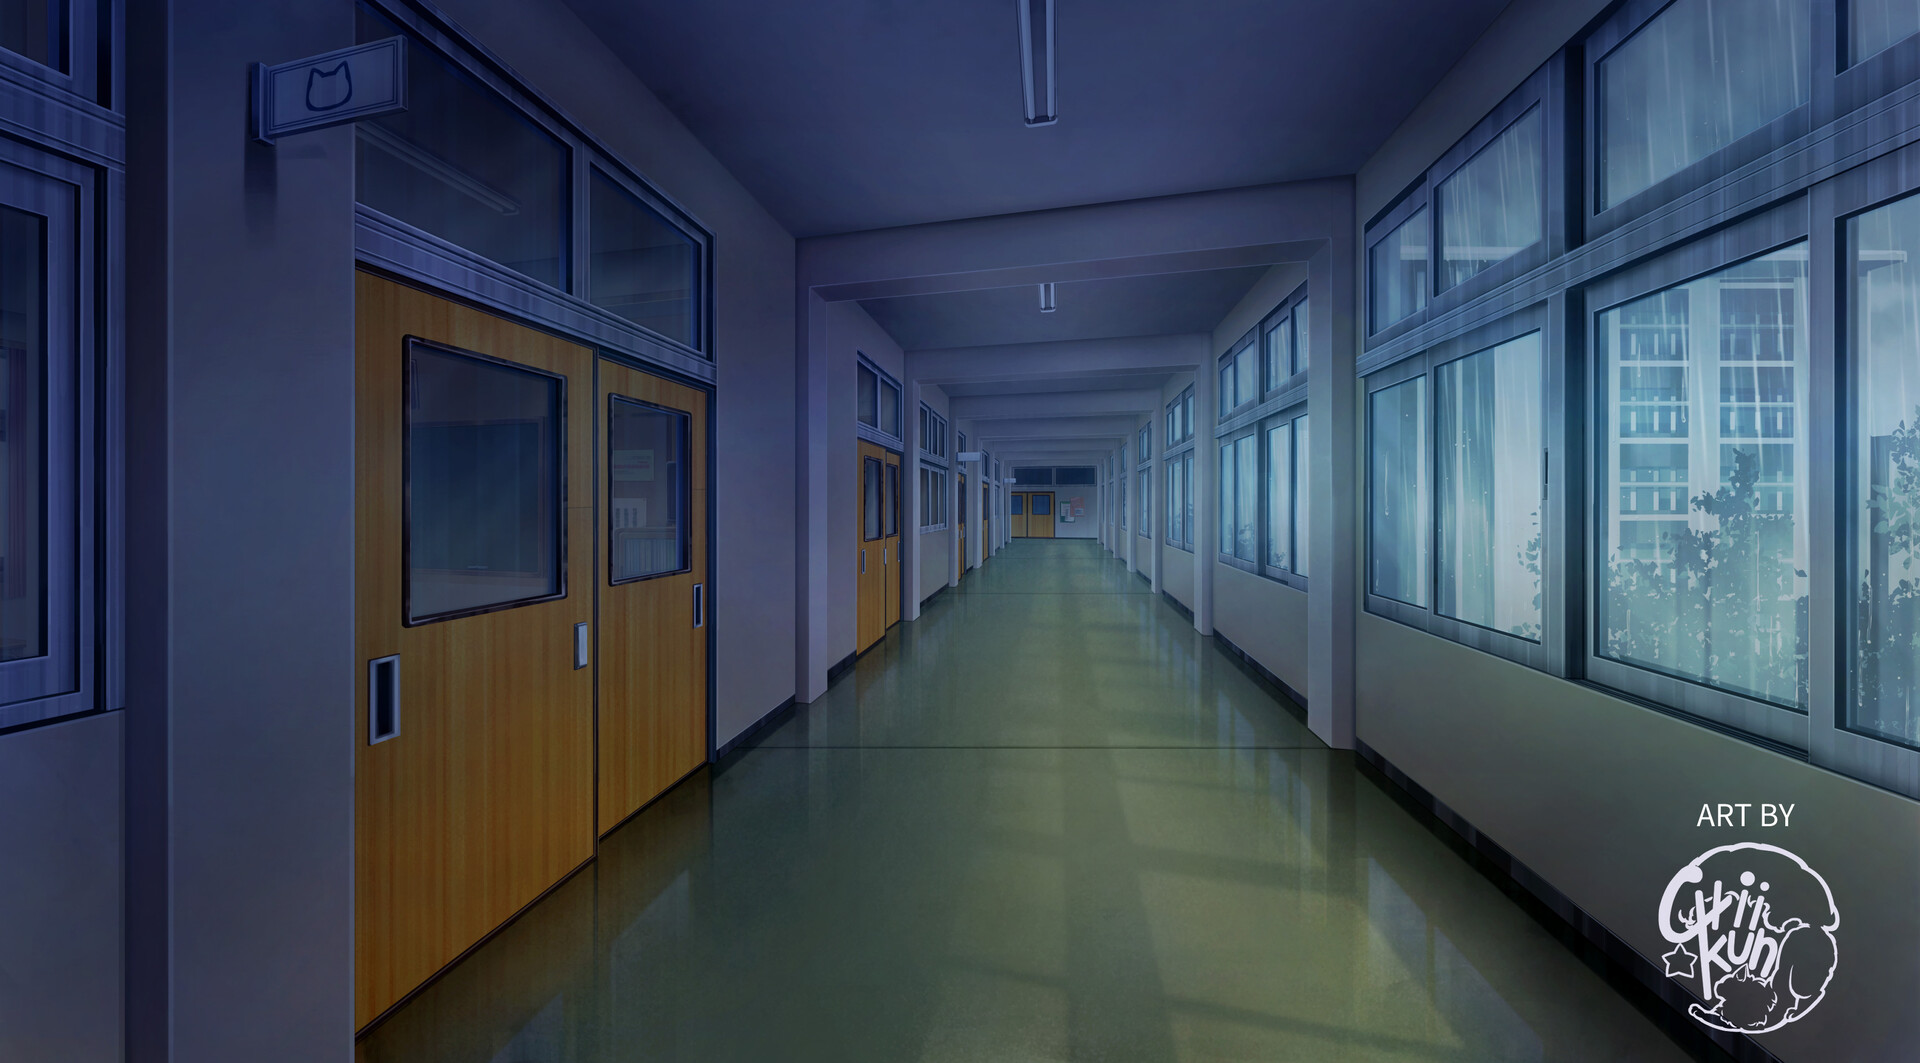 Classroom - Evening, 2D Anime Background , Illustration